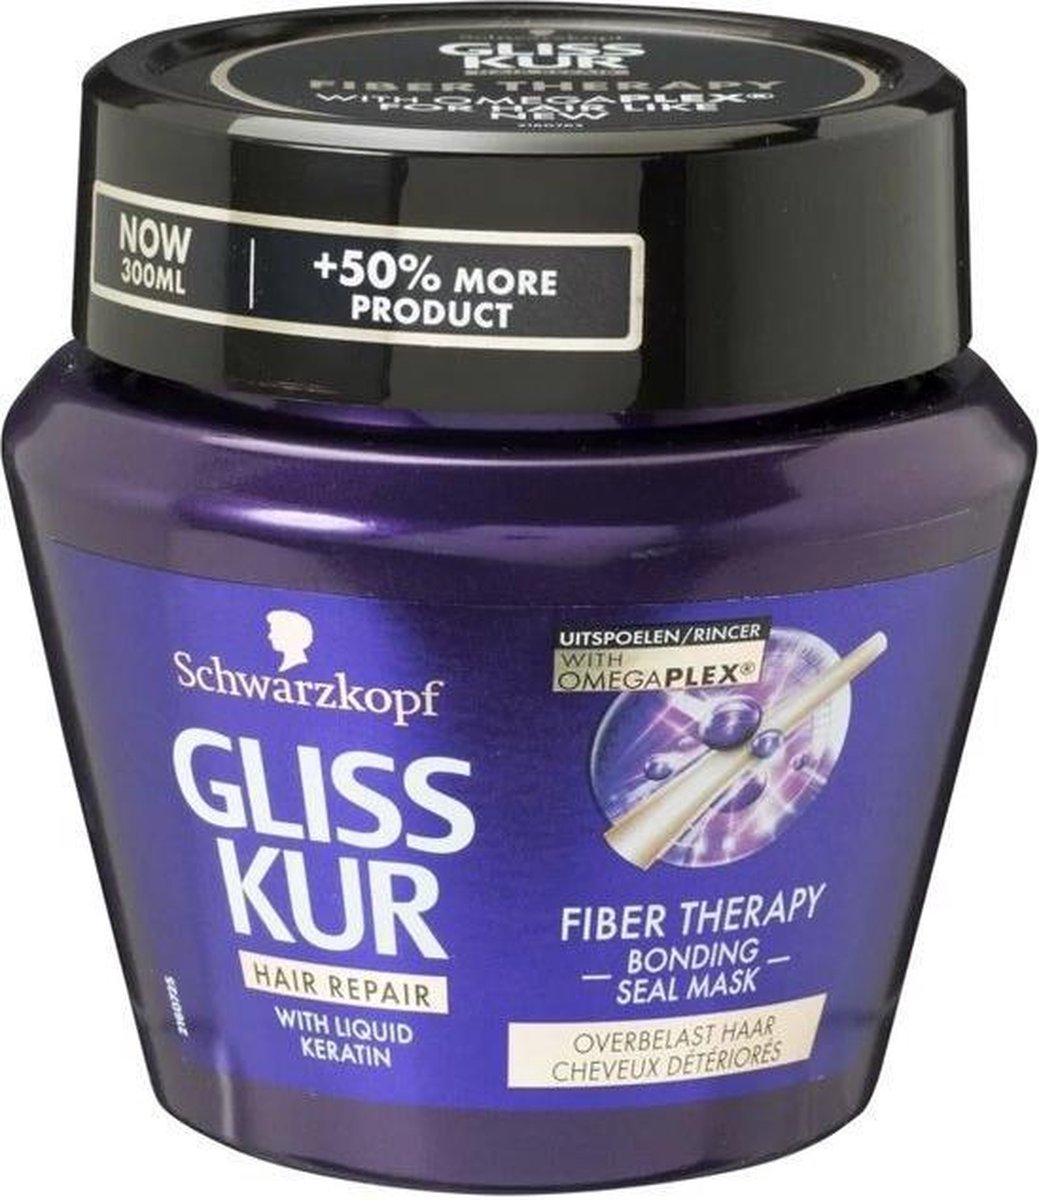 Gliss Kur Mask Fiber Therapy